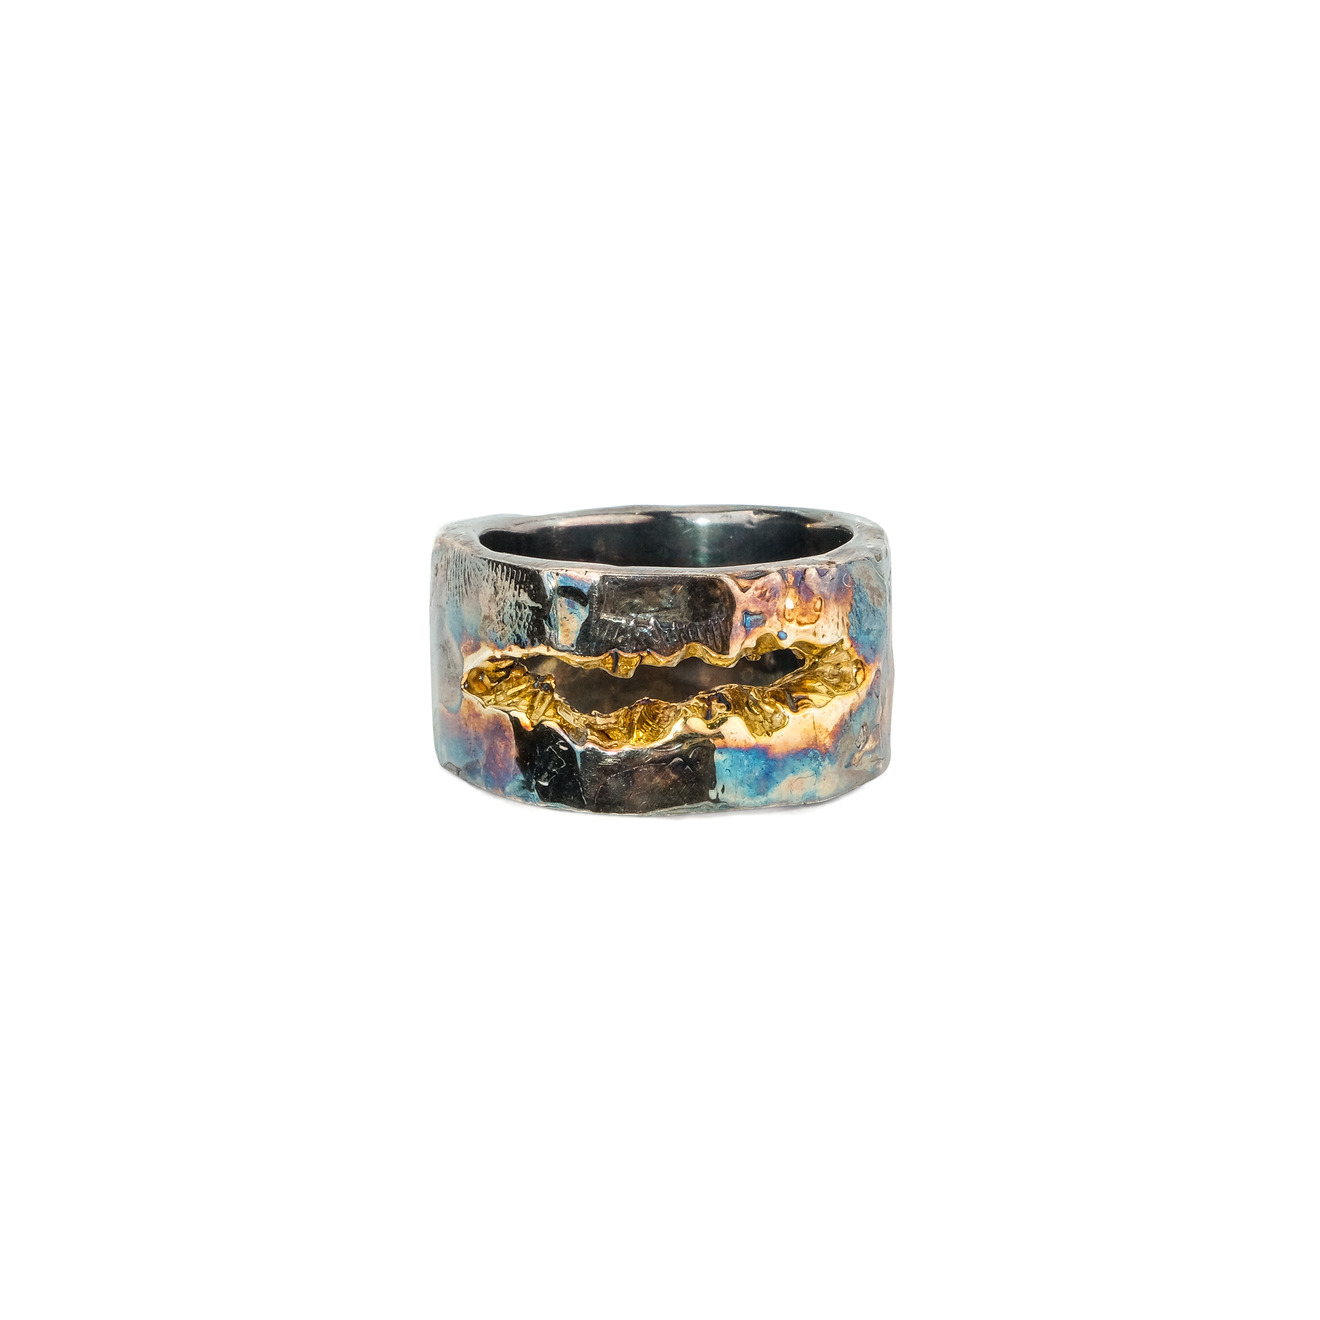 Kintsugi Jewelry Кольцо Forgiveness из серебра с позолотой подвеска из серебра с позолотой п4п0540652п эстет